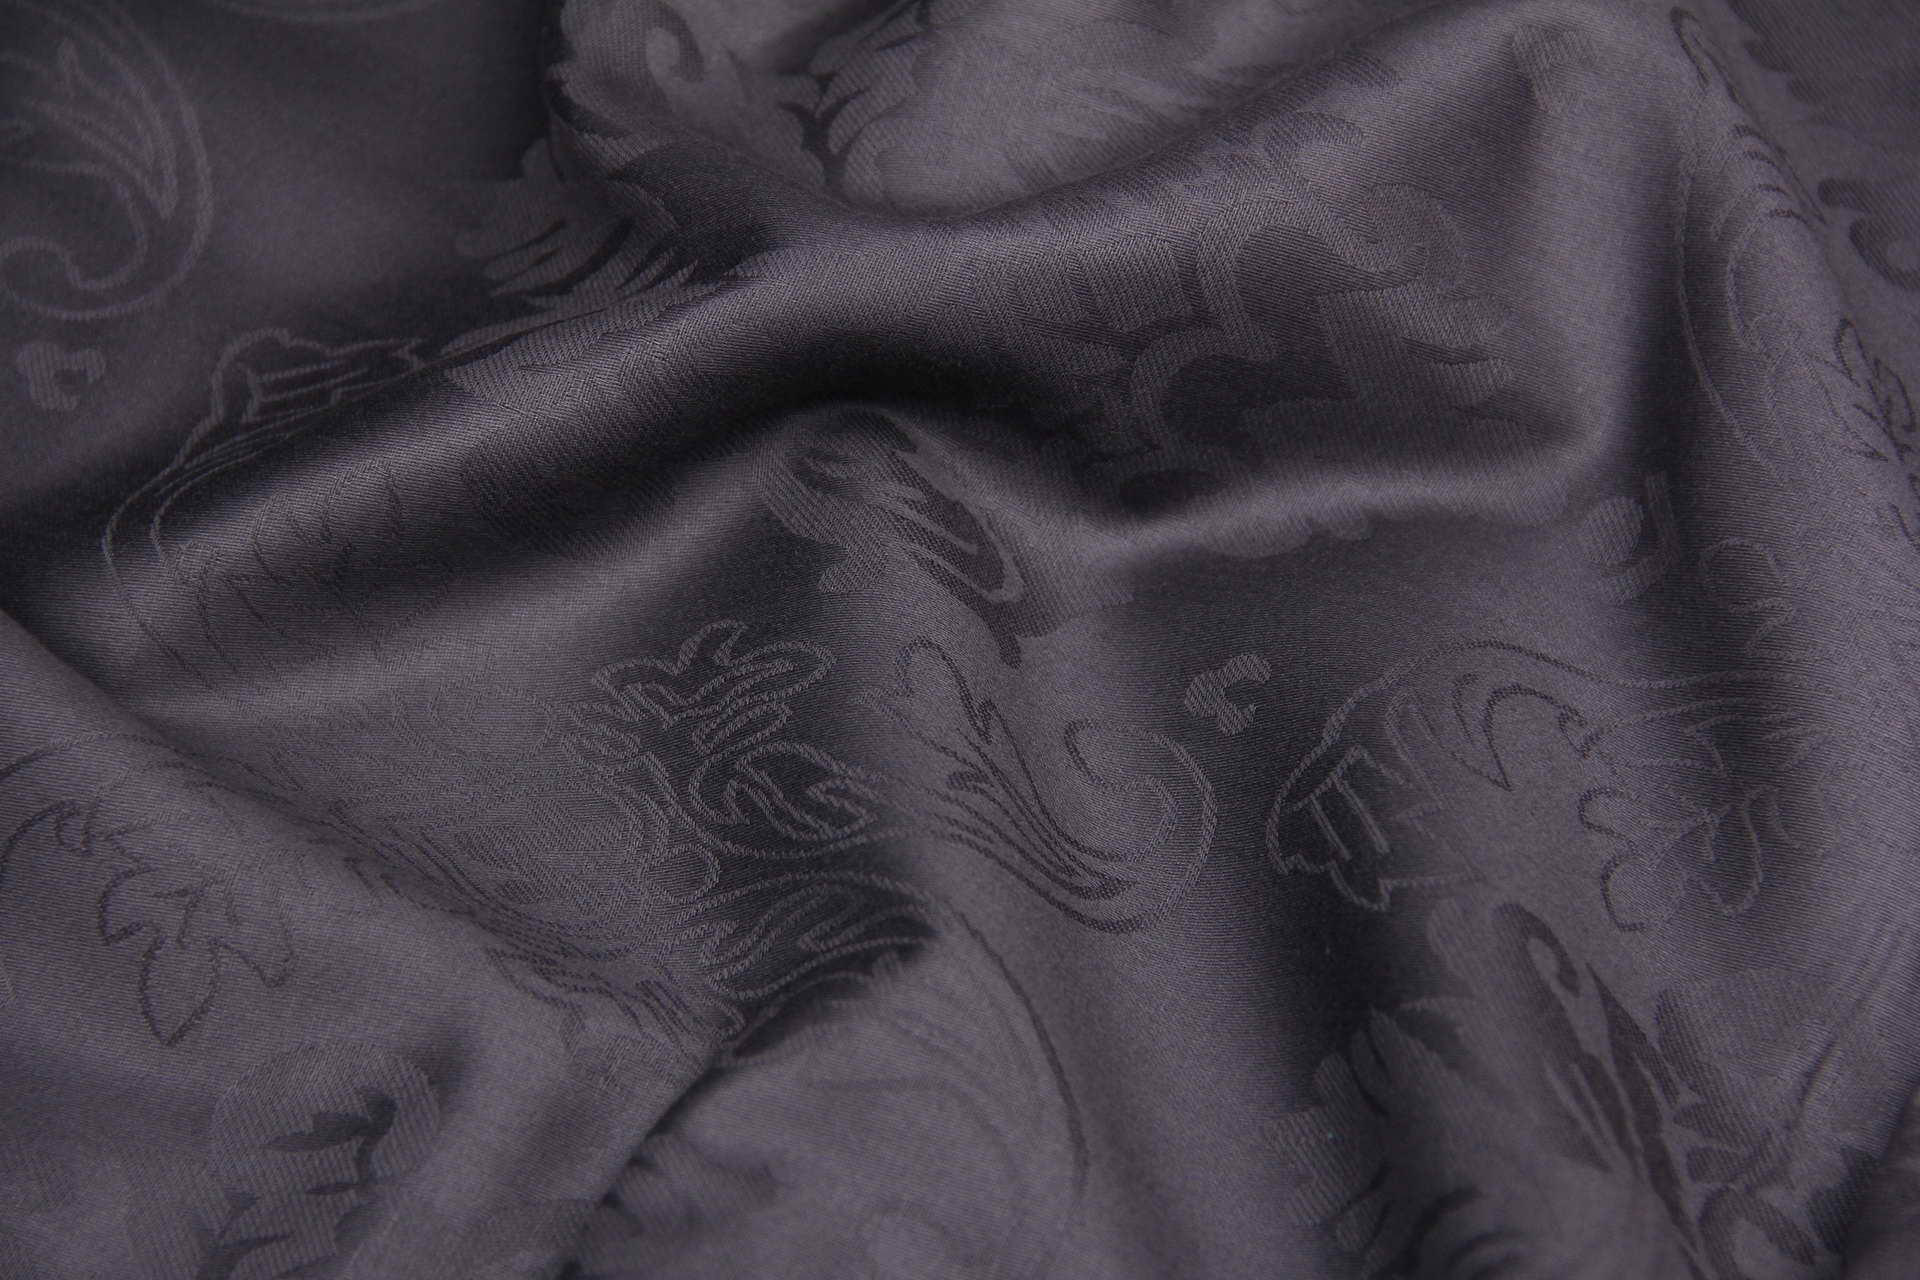 Ткань Сатин жаккард Флоренция Графит, Турция, ширина 240см, плотность 130 г/м2